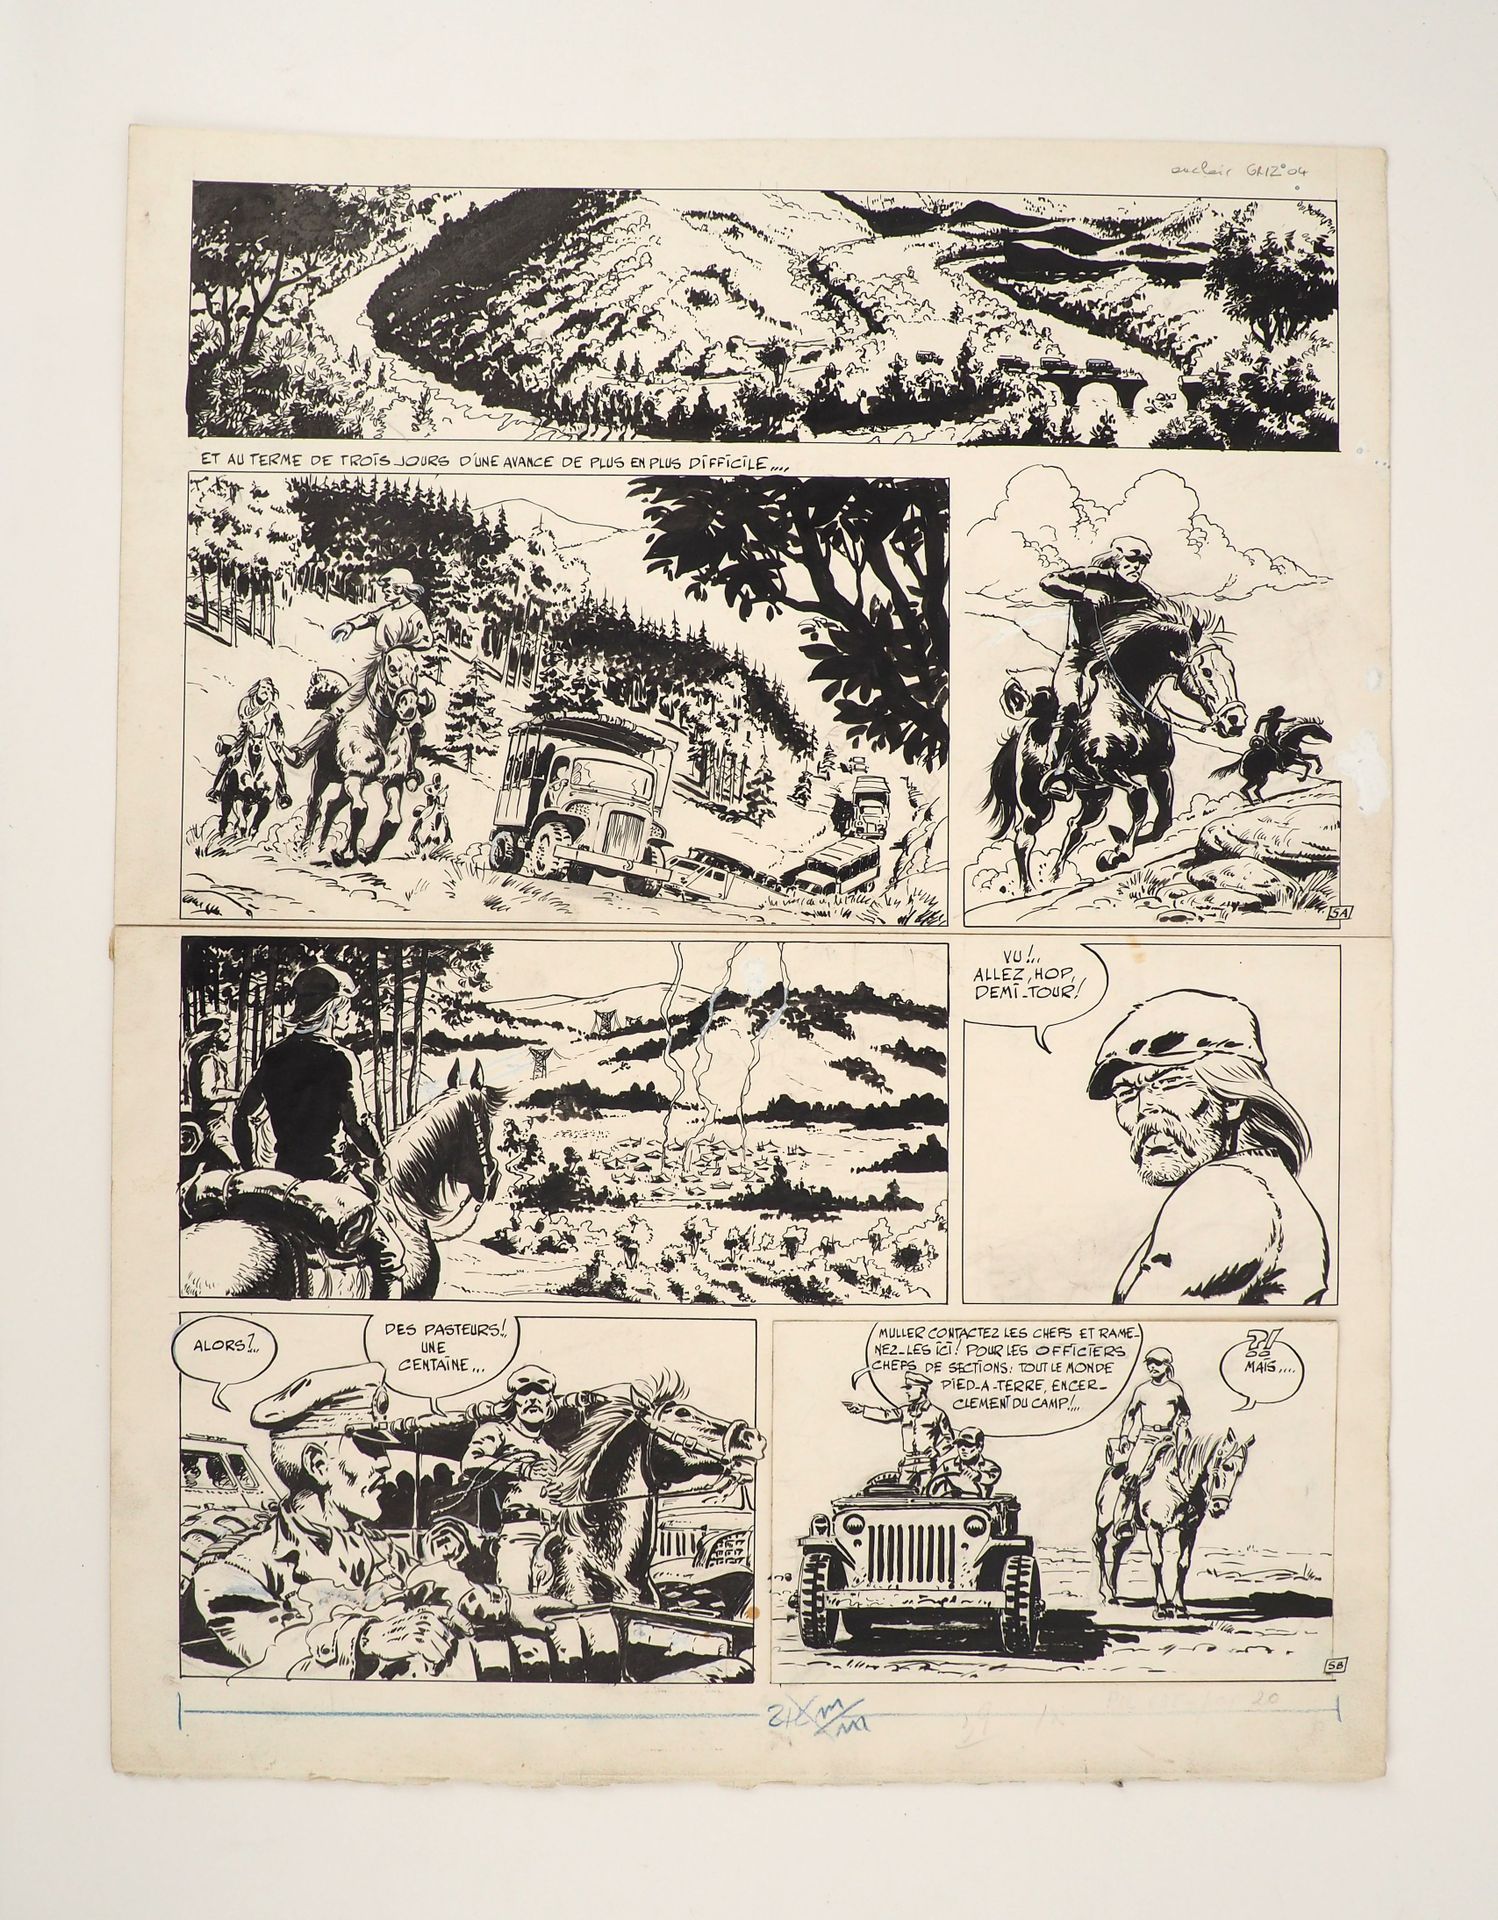 Null 奥克莱尔-克劳德
杰森-穆勒
1972年发表在《Pilote》上的一篇故事的图版5
印度墨水
最后一个板块上的补丁
51 x 40 cm